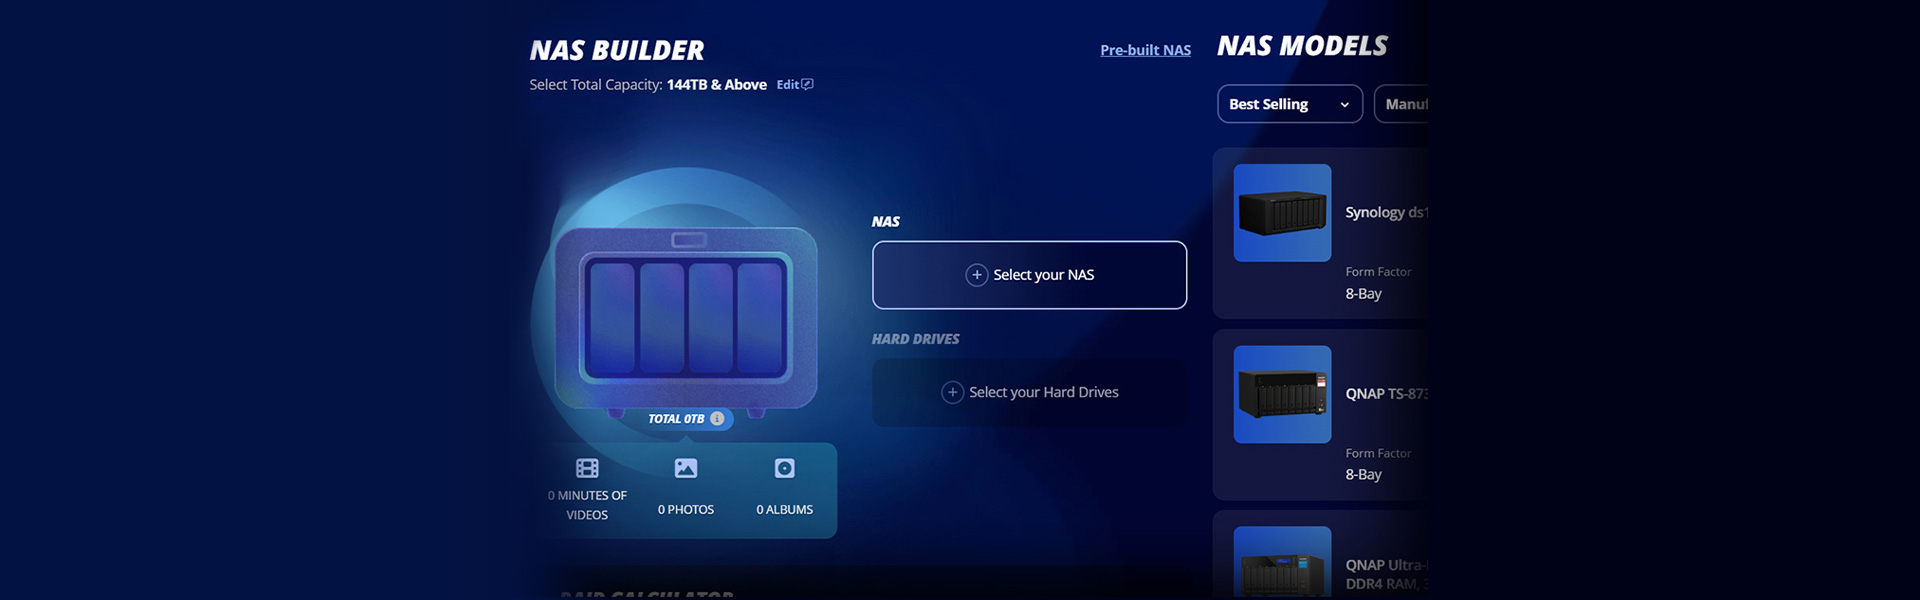 Newegg Unwraps NAS Builder to Help Shoppers Improve Digital File Storage